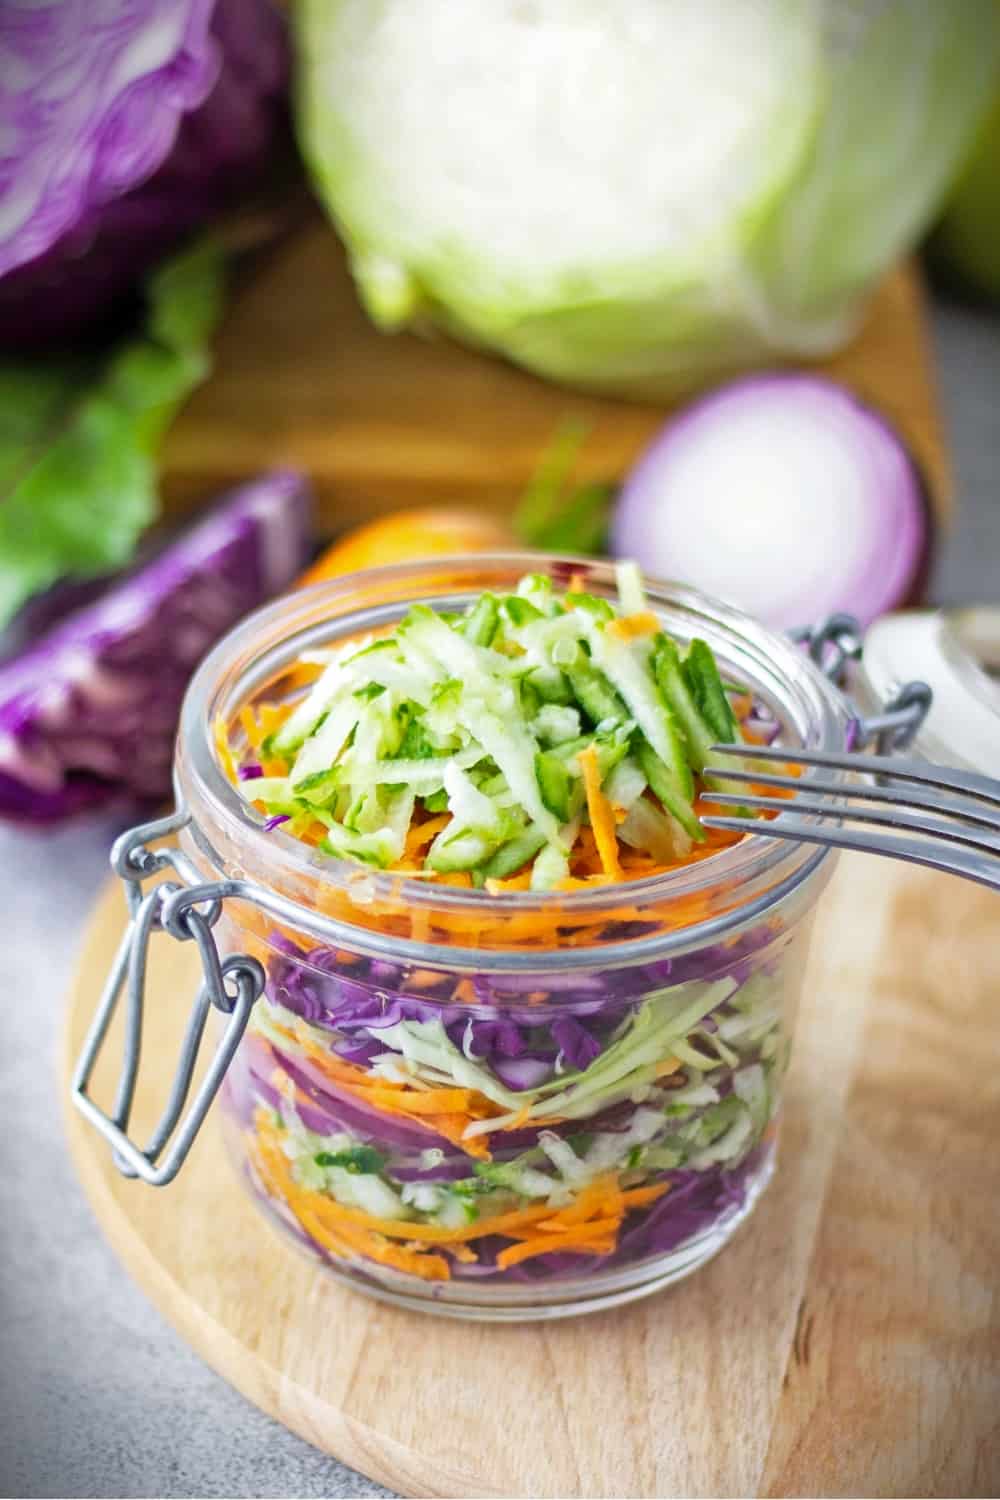 fresh coleslaw in a glass jar